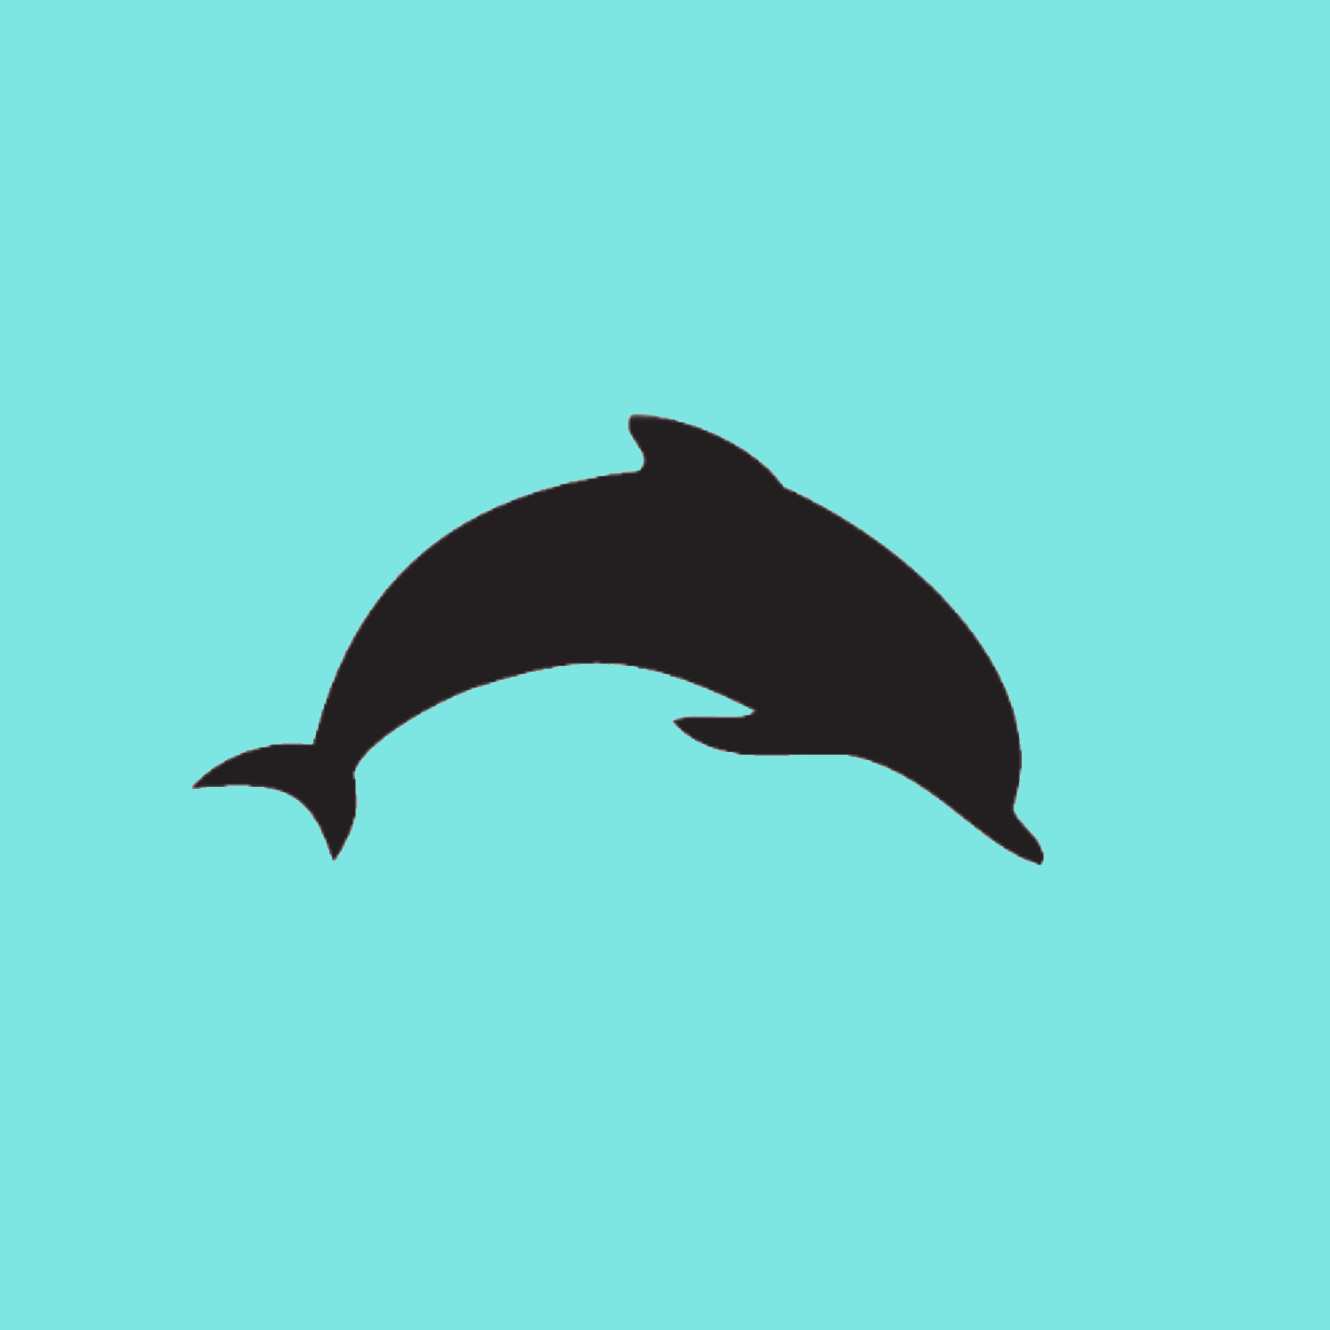 Dolphin Entertainment logo